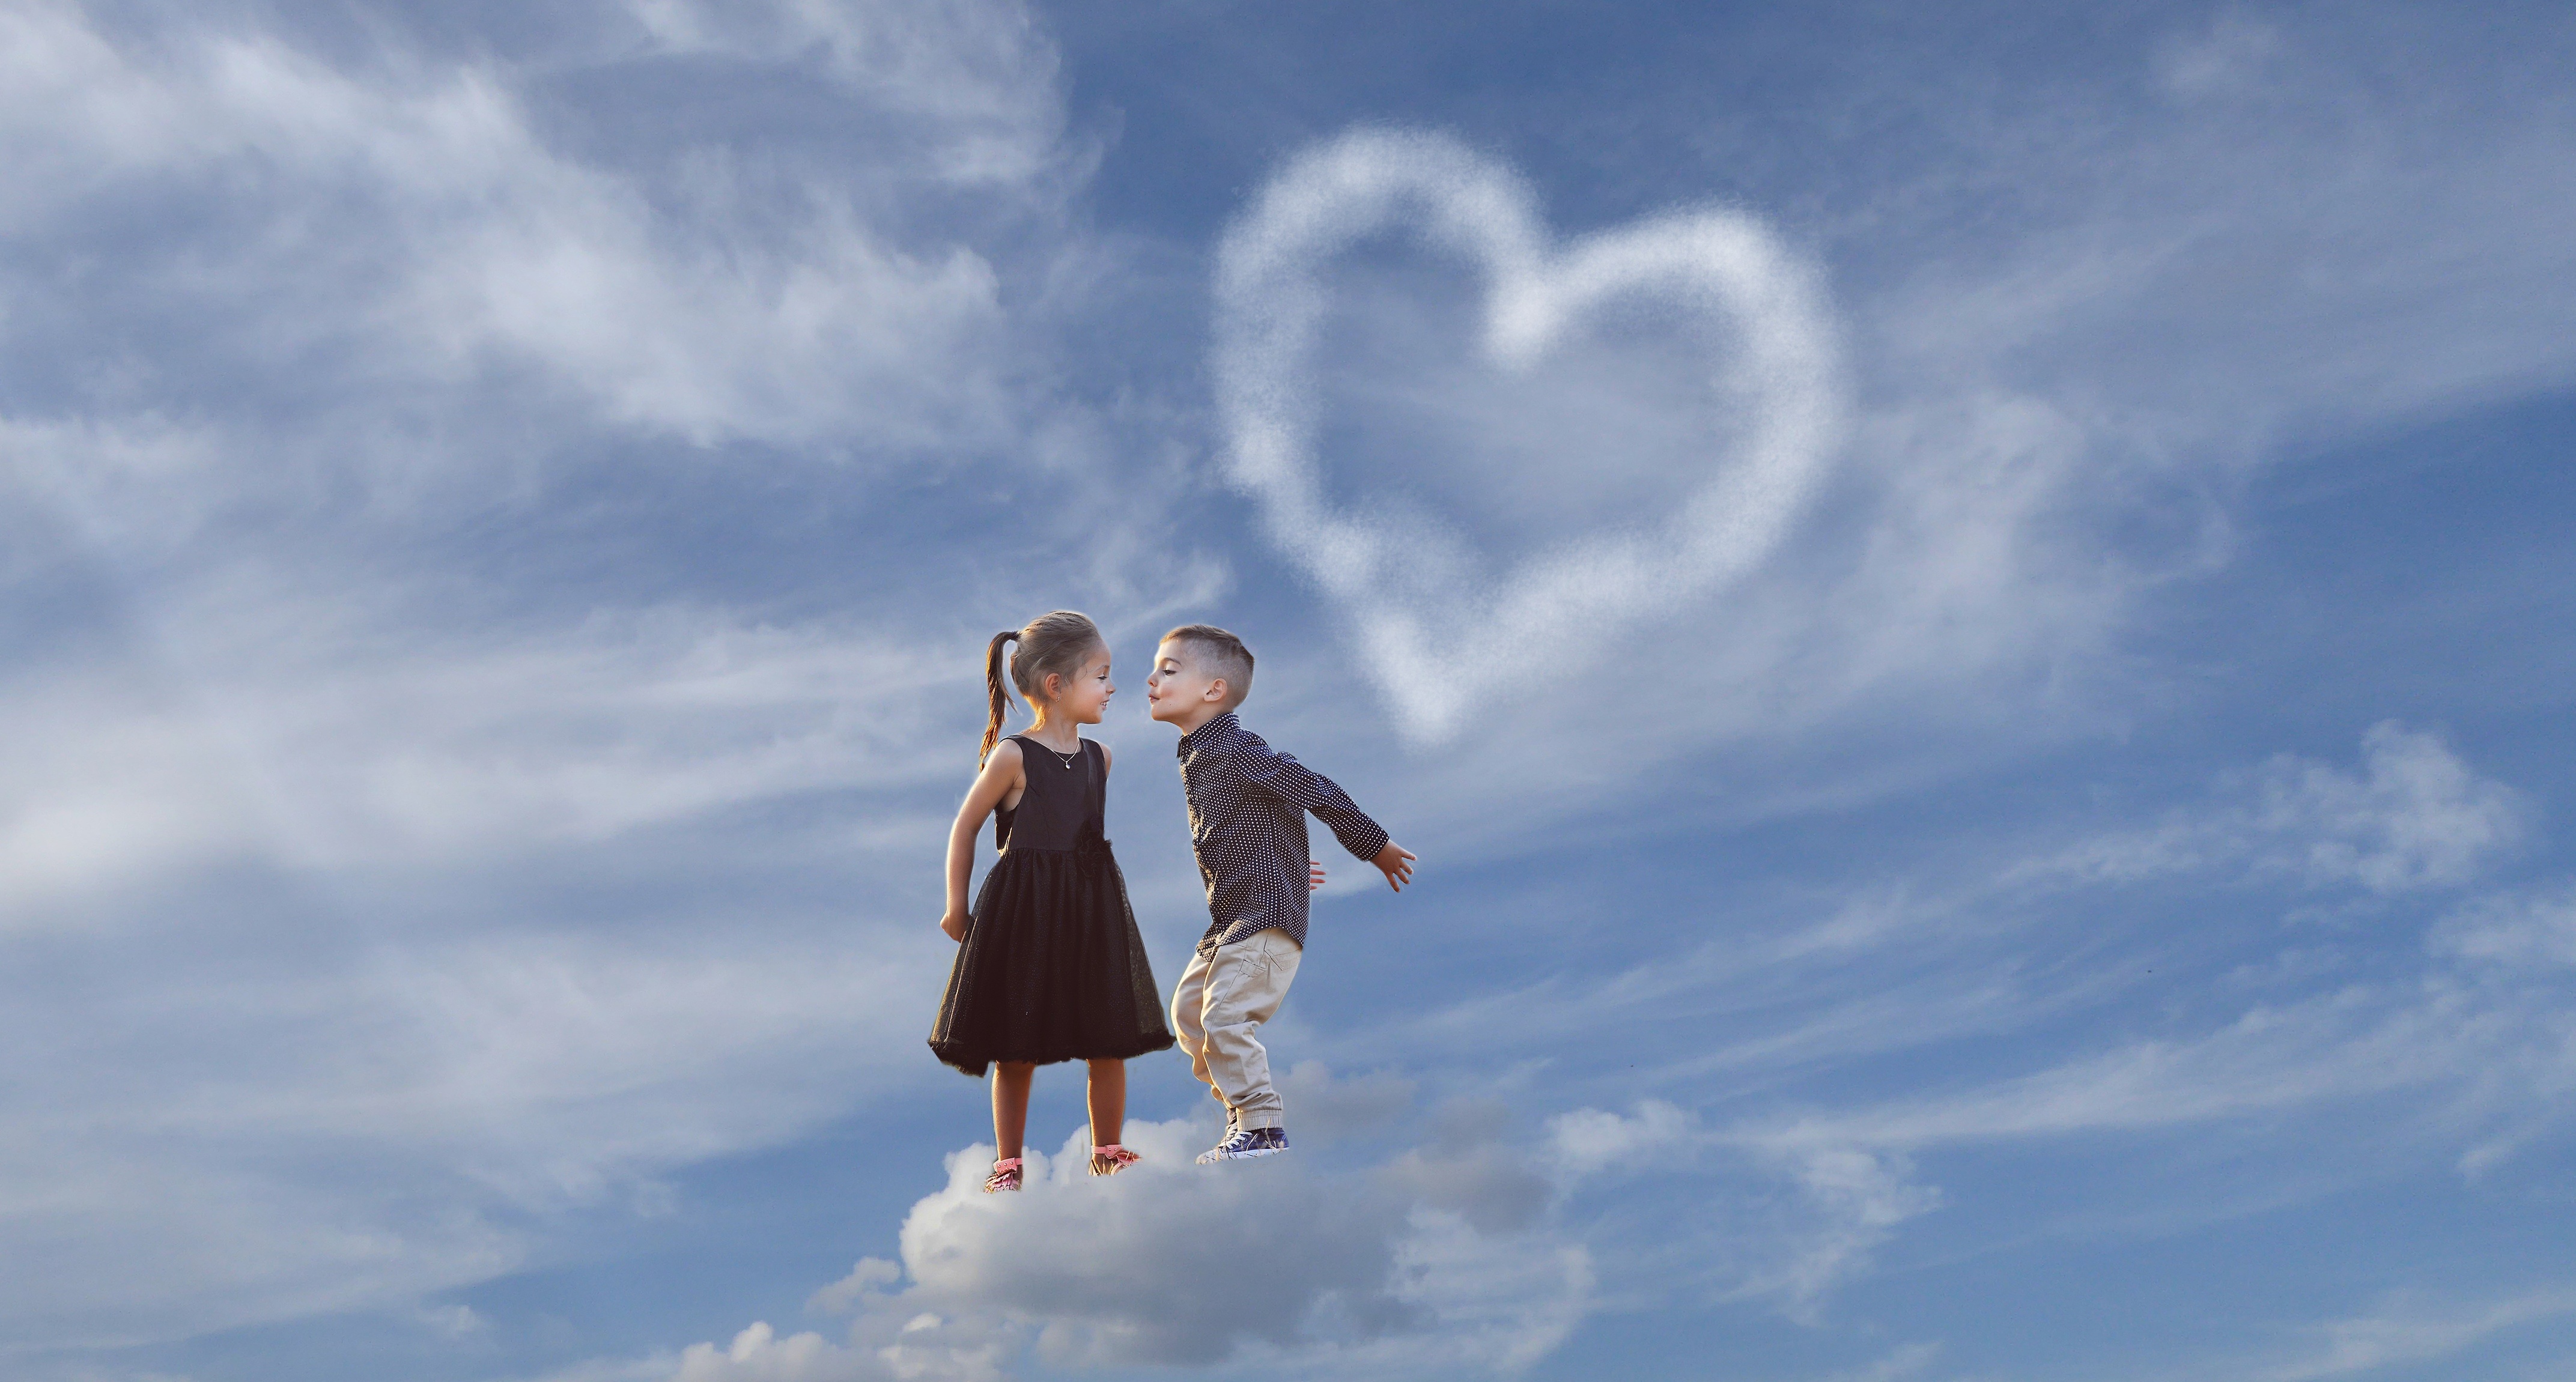 Love Heart Kids Sky Free Image Download